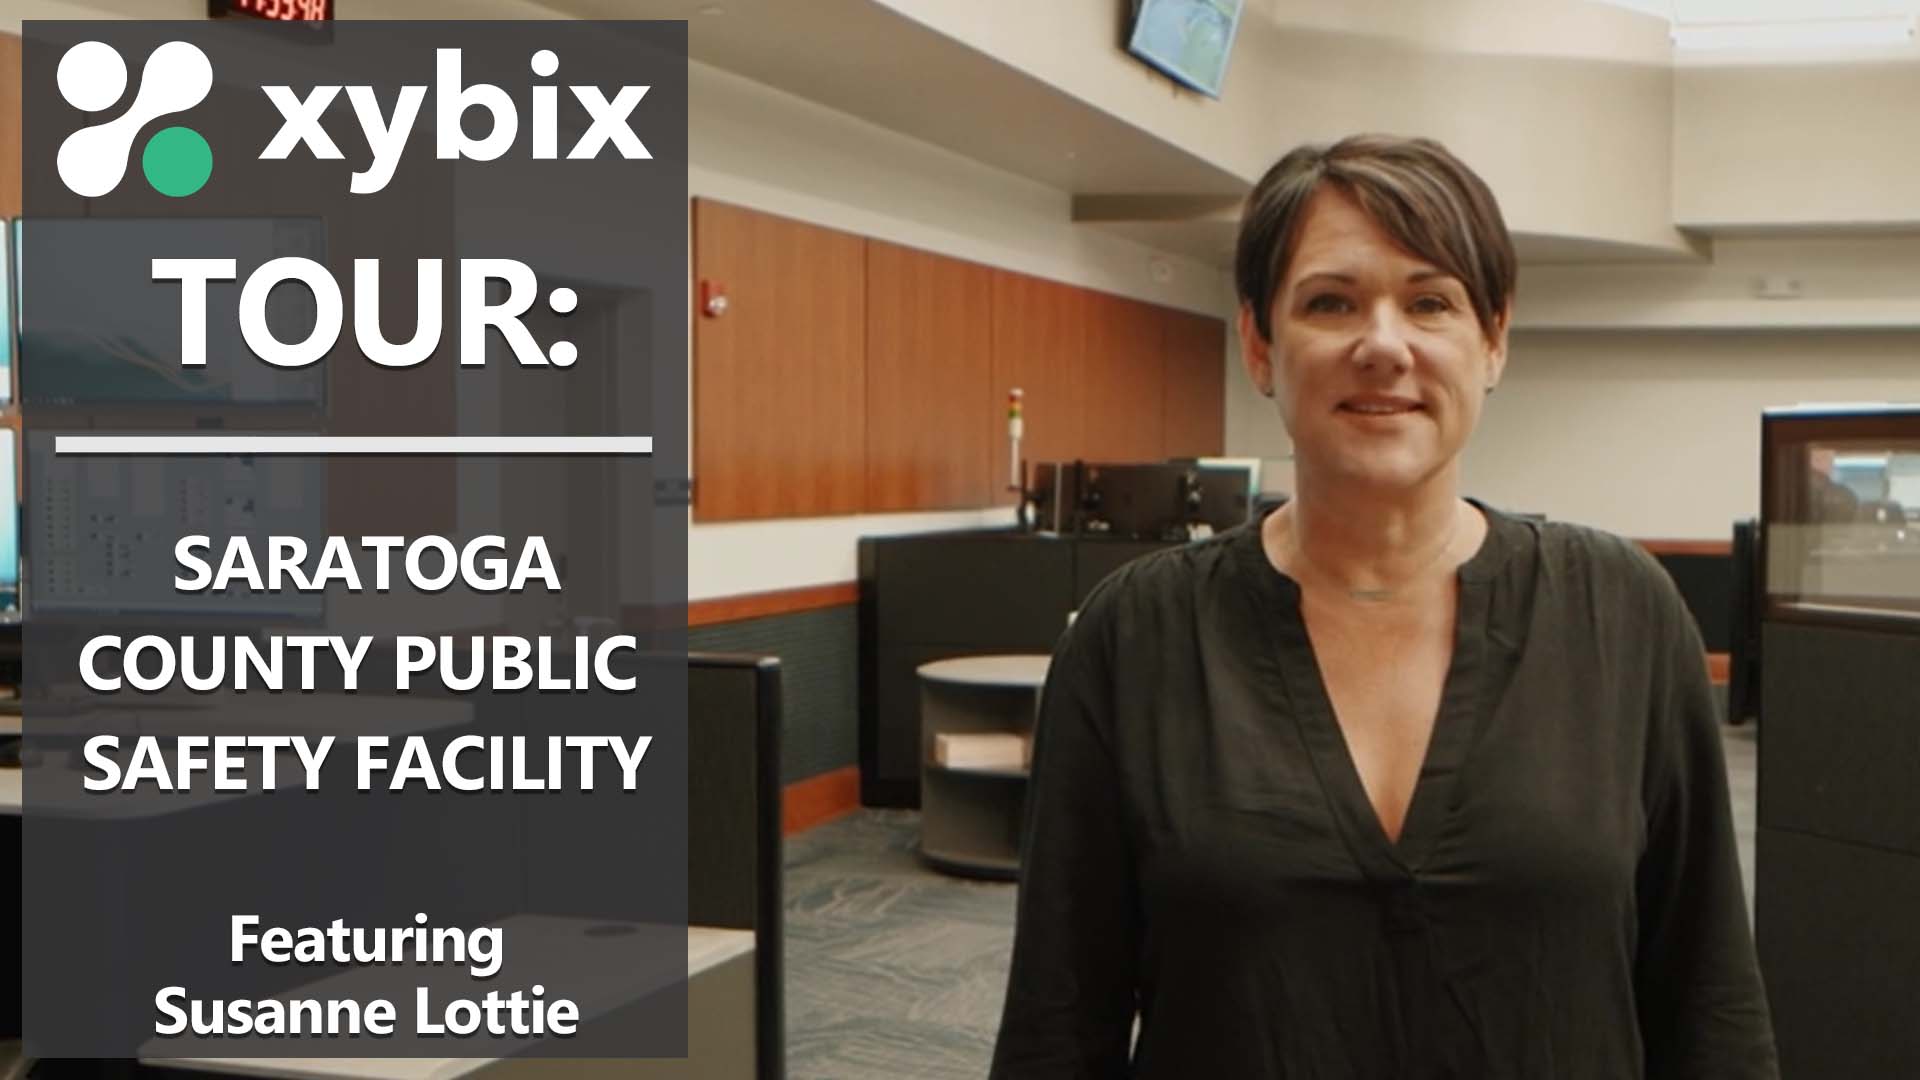 Xybix Tour of Saratoga County Public Safety (MA) featuring Susanne Lottie